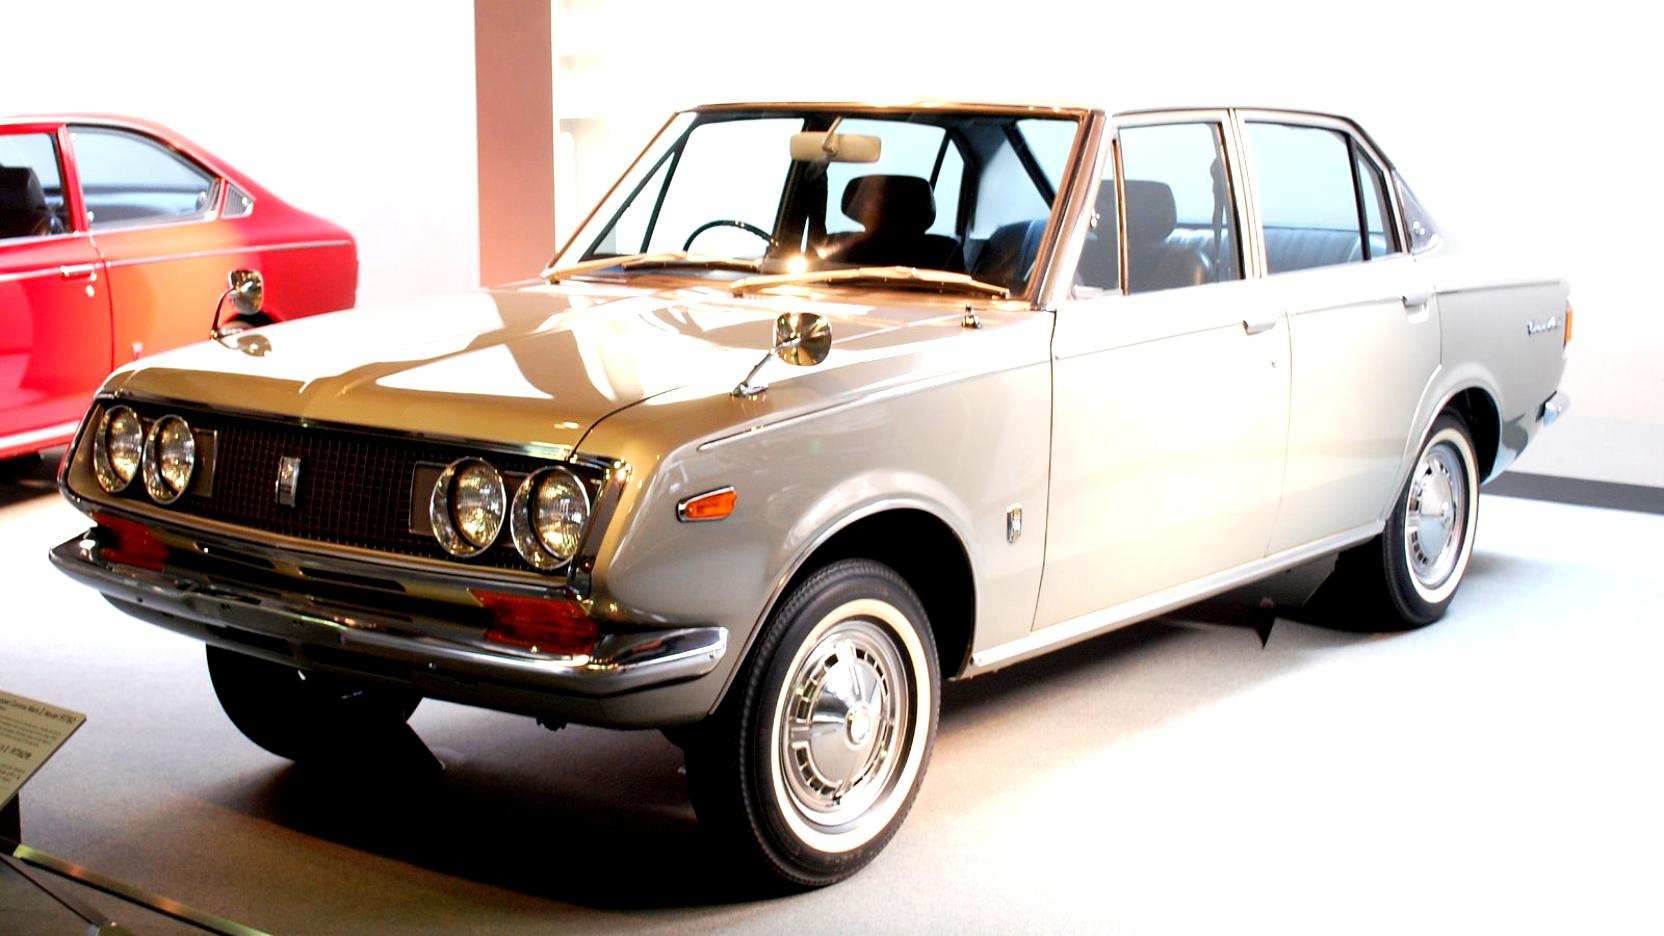 Первое поколение автомобилей. Toyota Mark 2 1968. Toyota Corona Mark II 1968. Тойота Corona Mark 2.